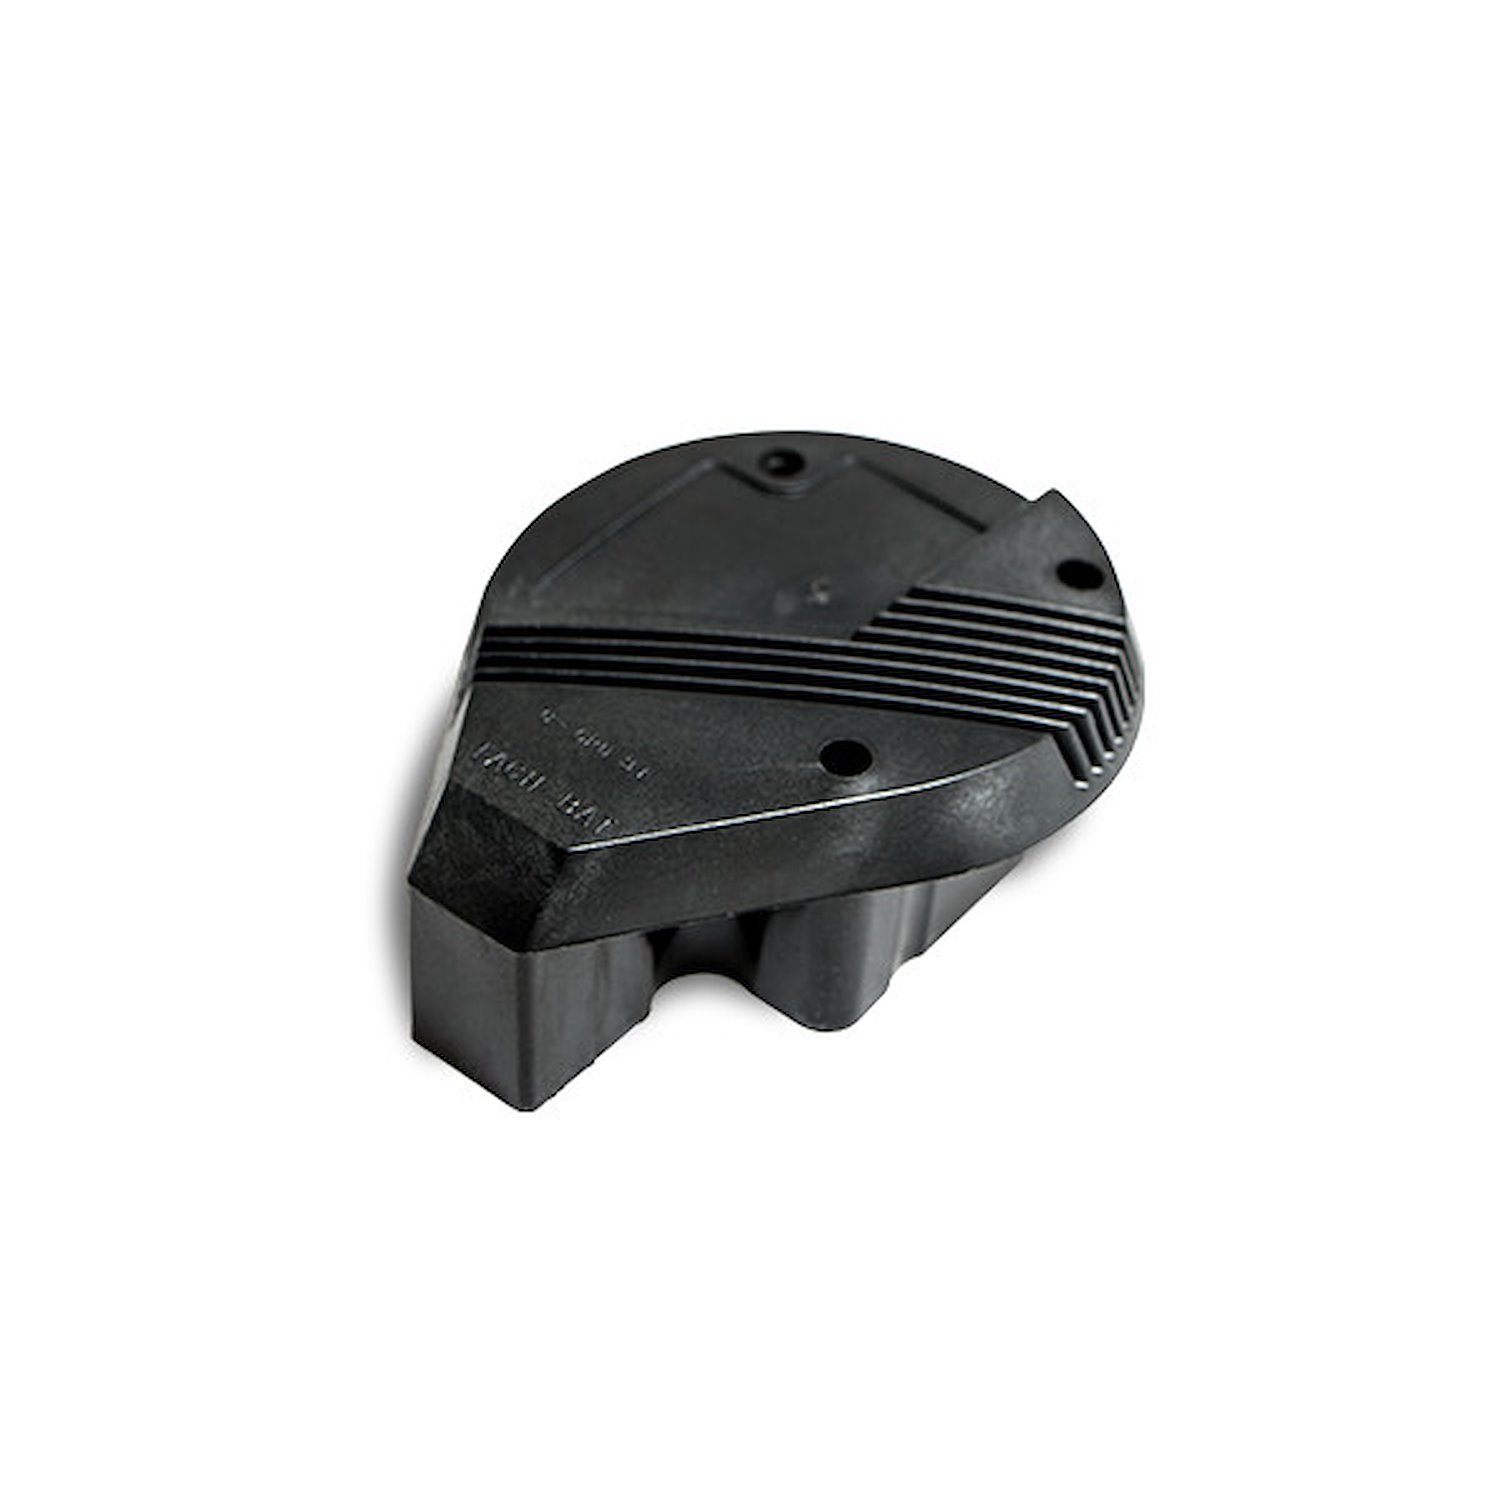 JM6906BK HEI Distributor Super Cap Coil Dust Cover, Black